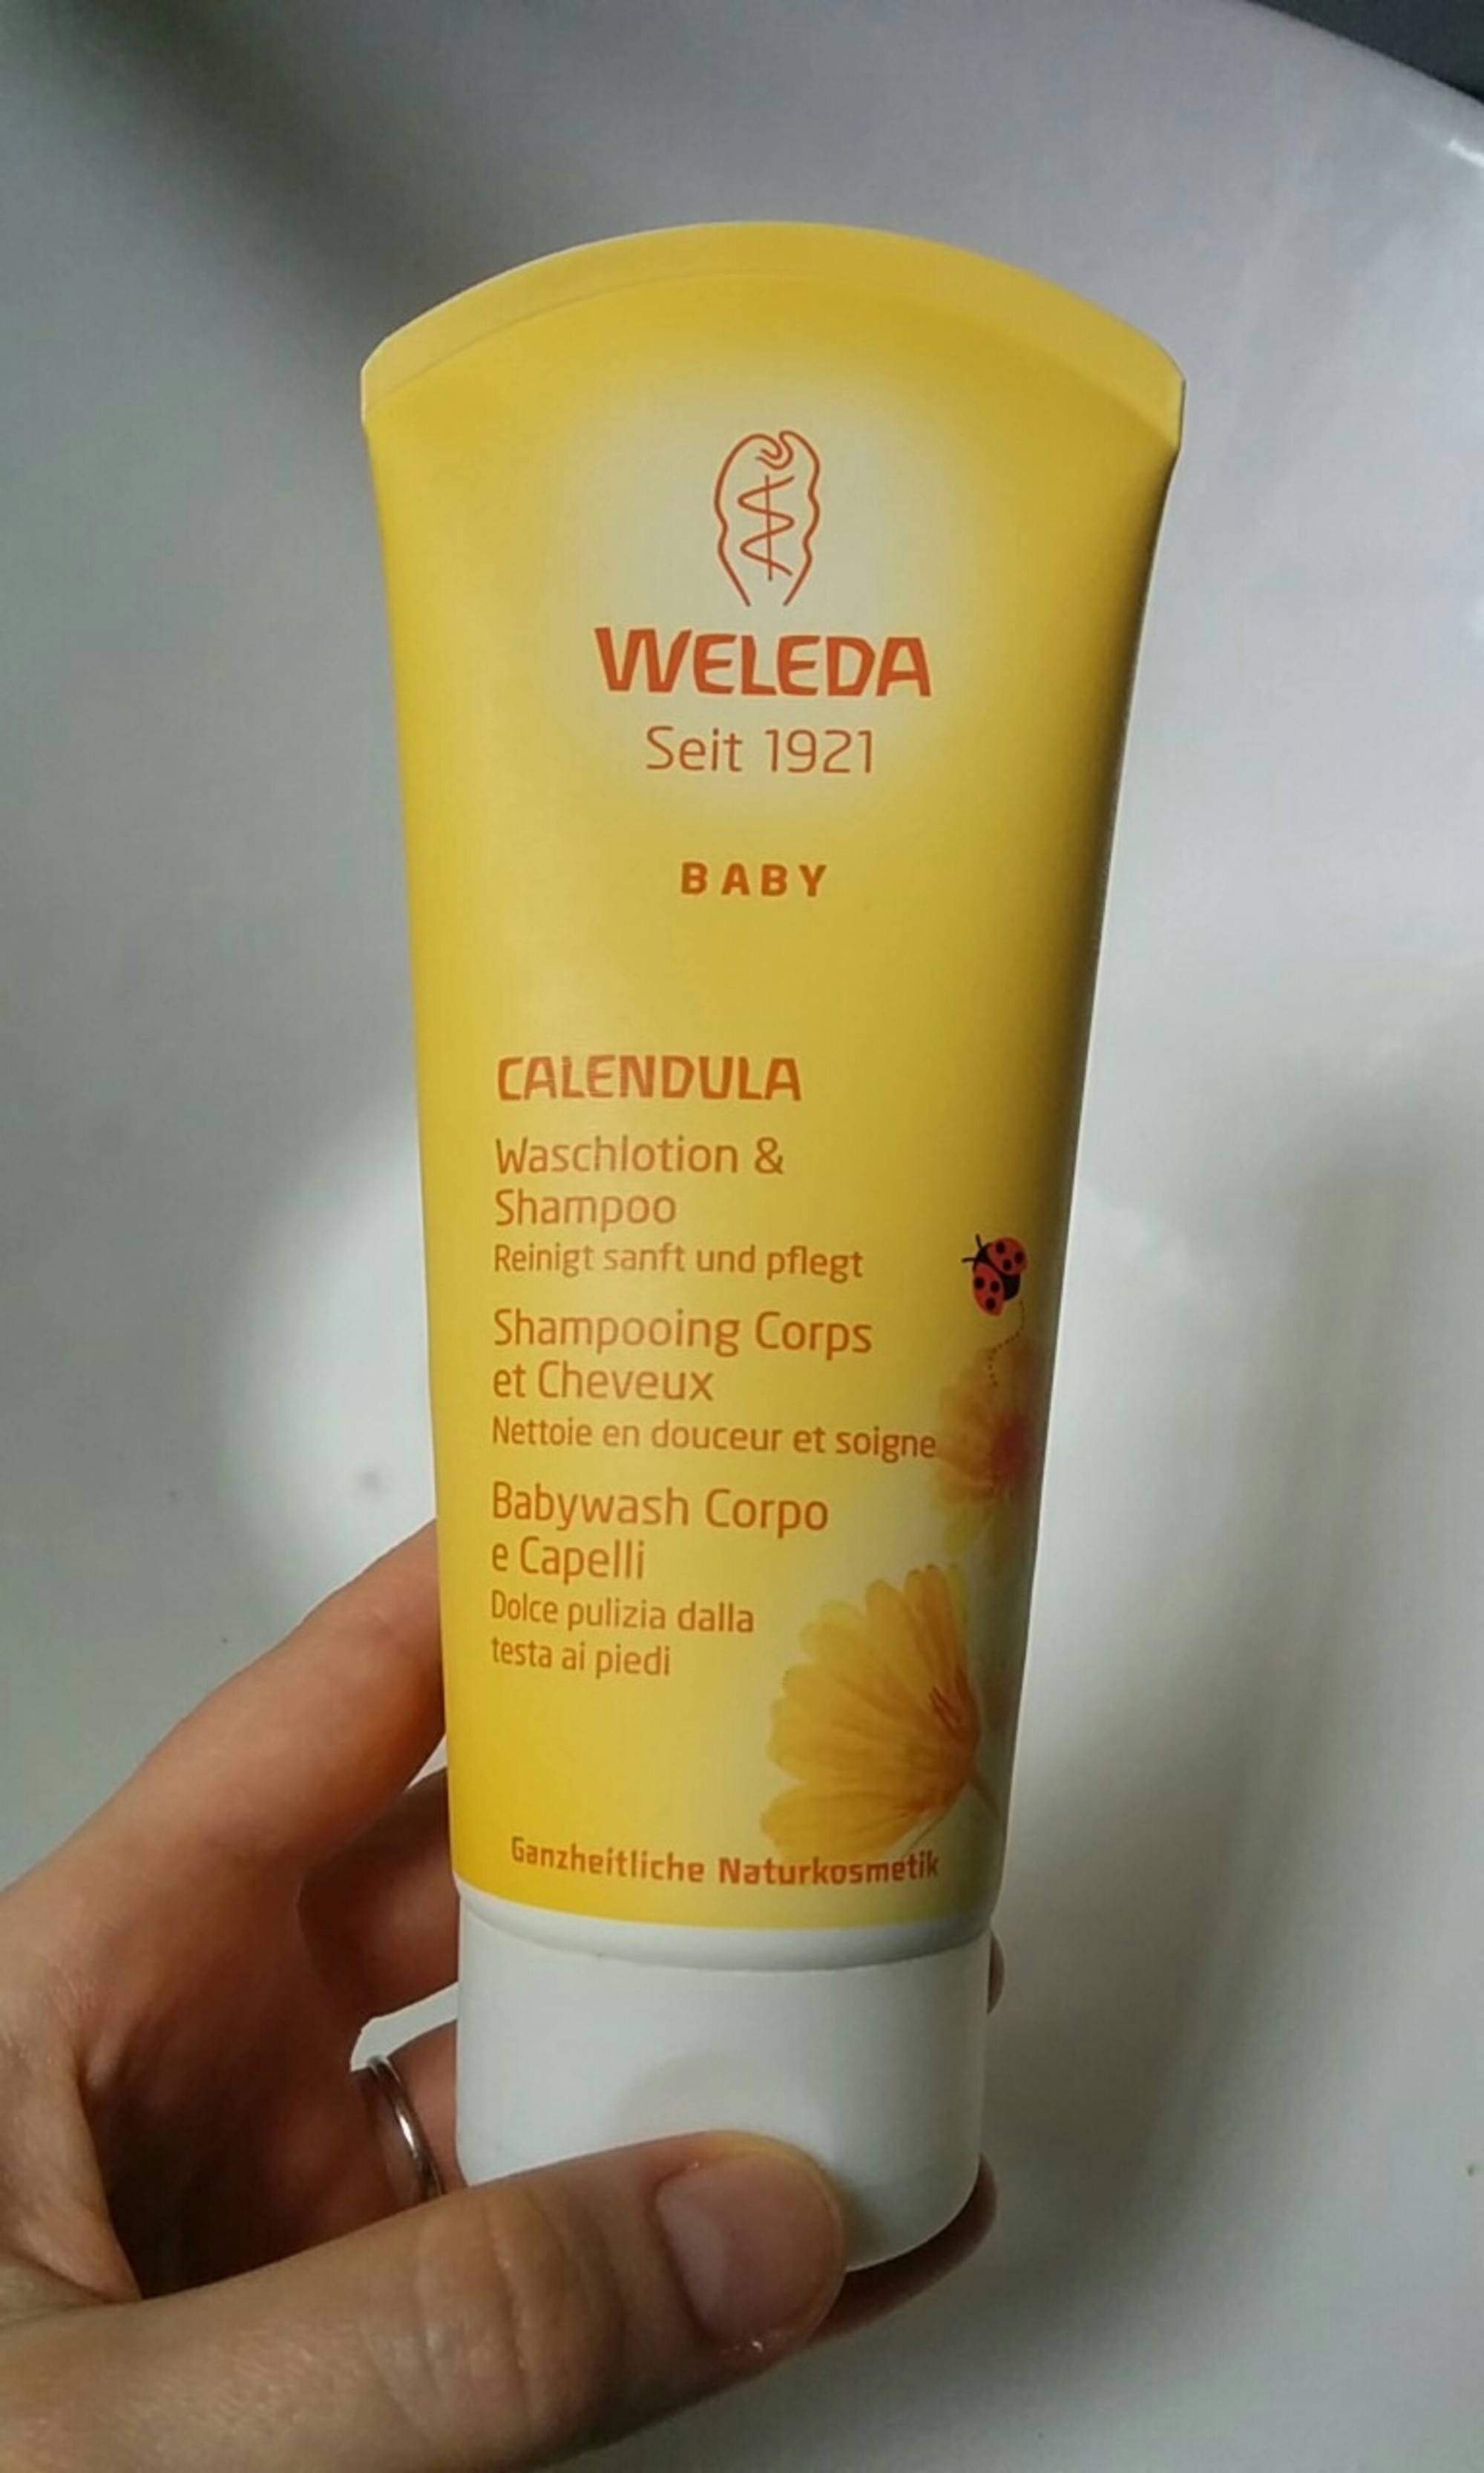 WELEDA - Calendula Baby - Shampooing corps et cheveux